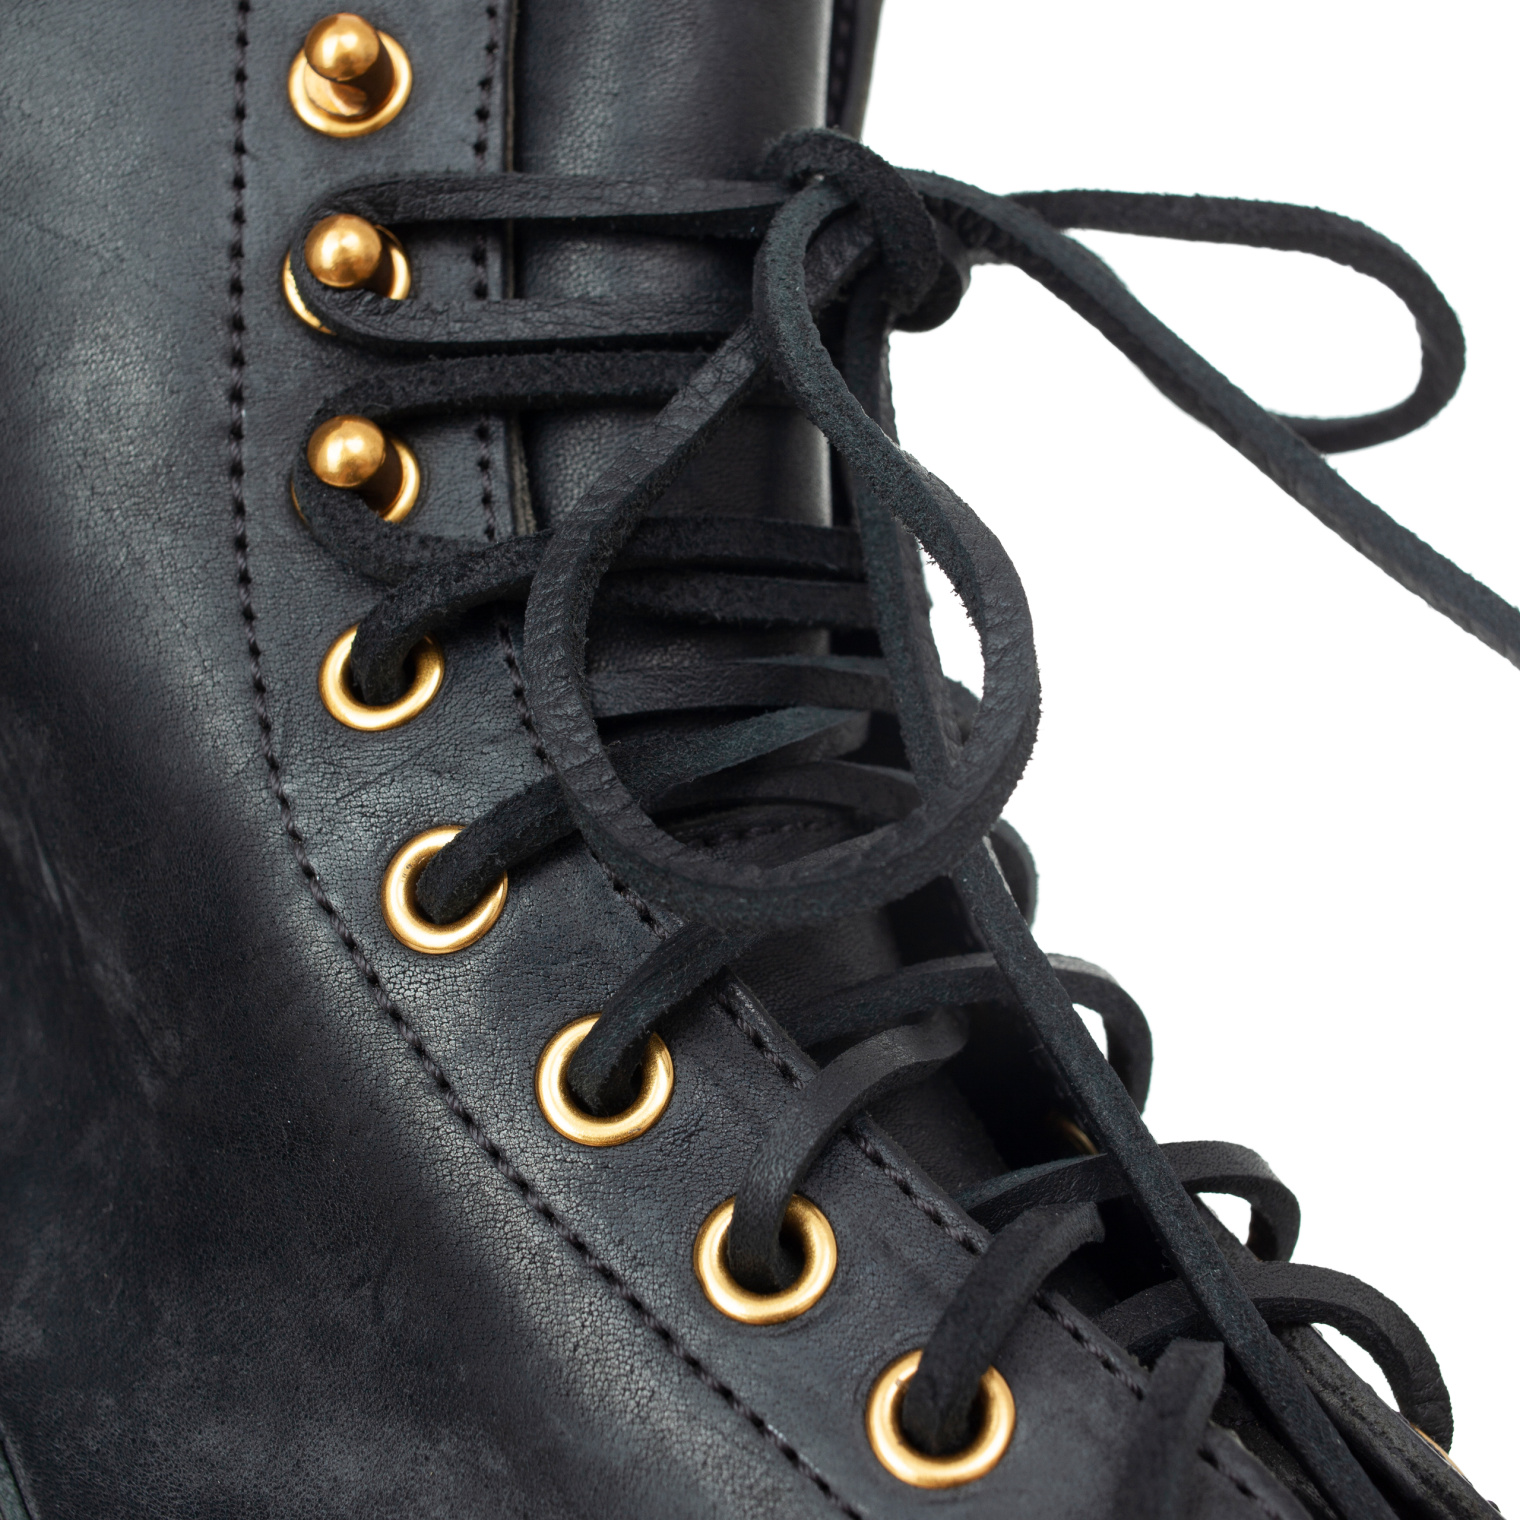 visvim Poundmaker-folk leather boots